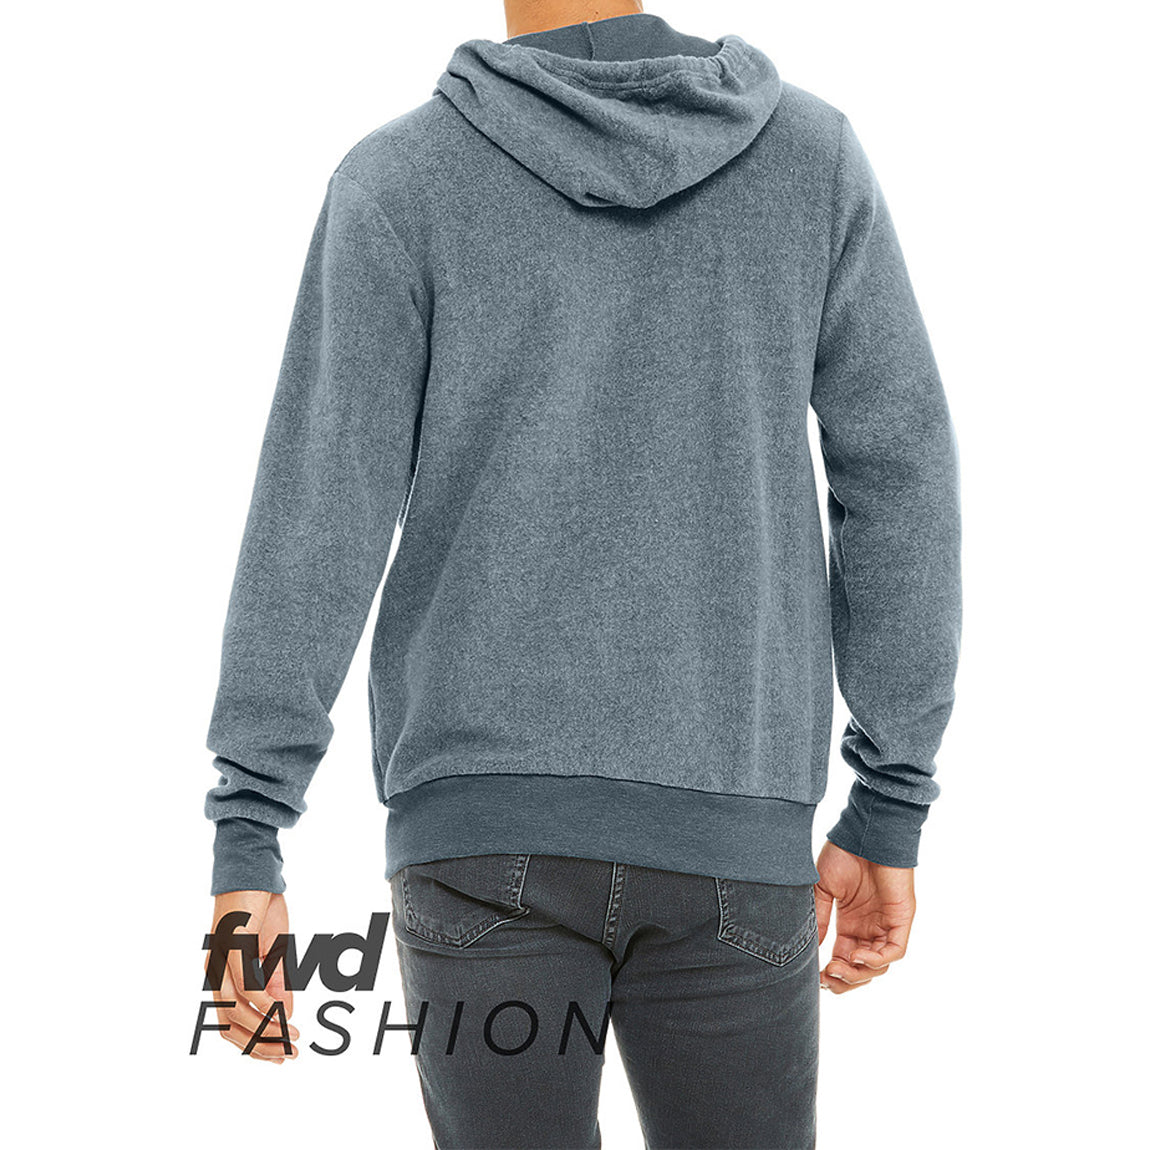 FWD Fashion Sueded Fleece Full-Zip Hoodie